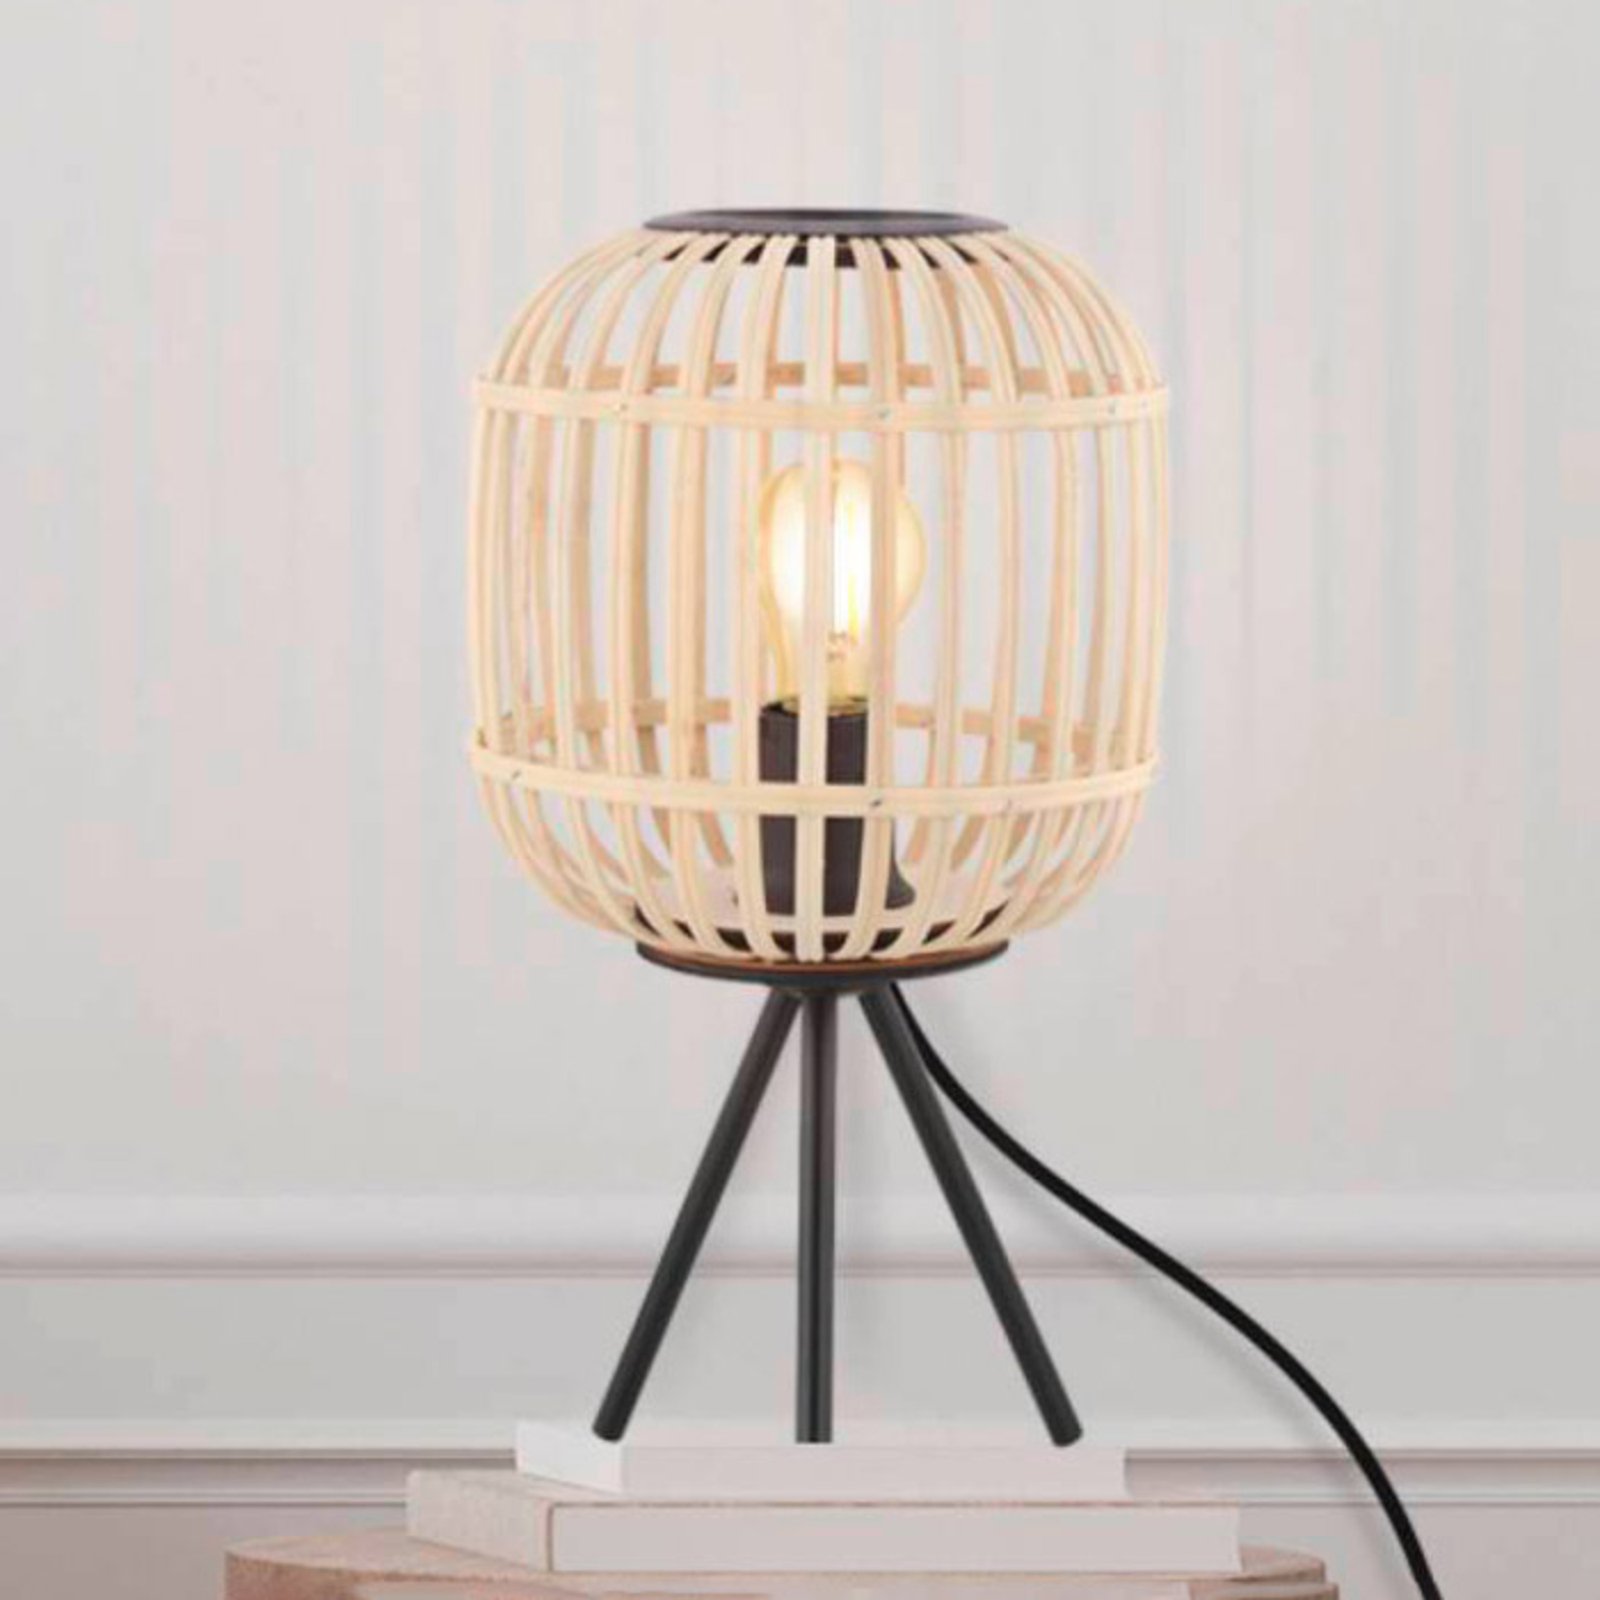 Bordesley table lamp, wooden lampshade